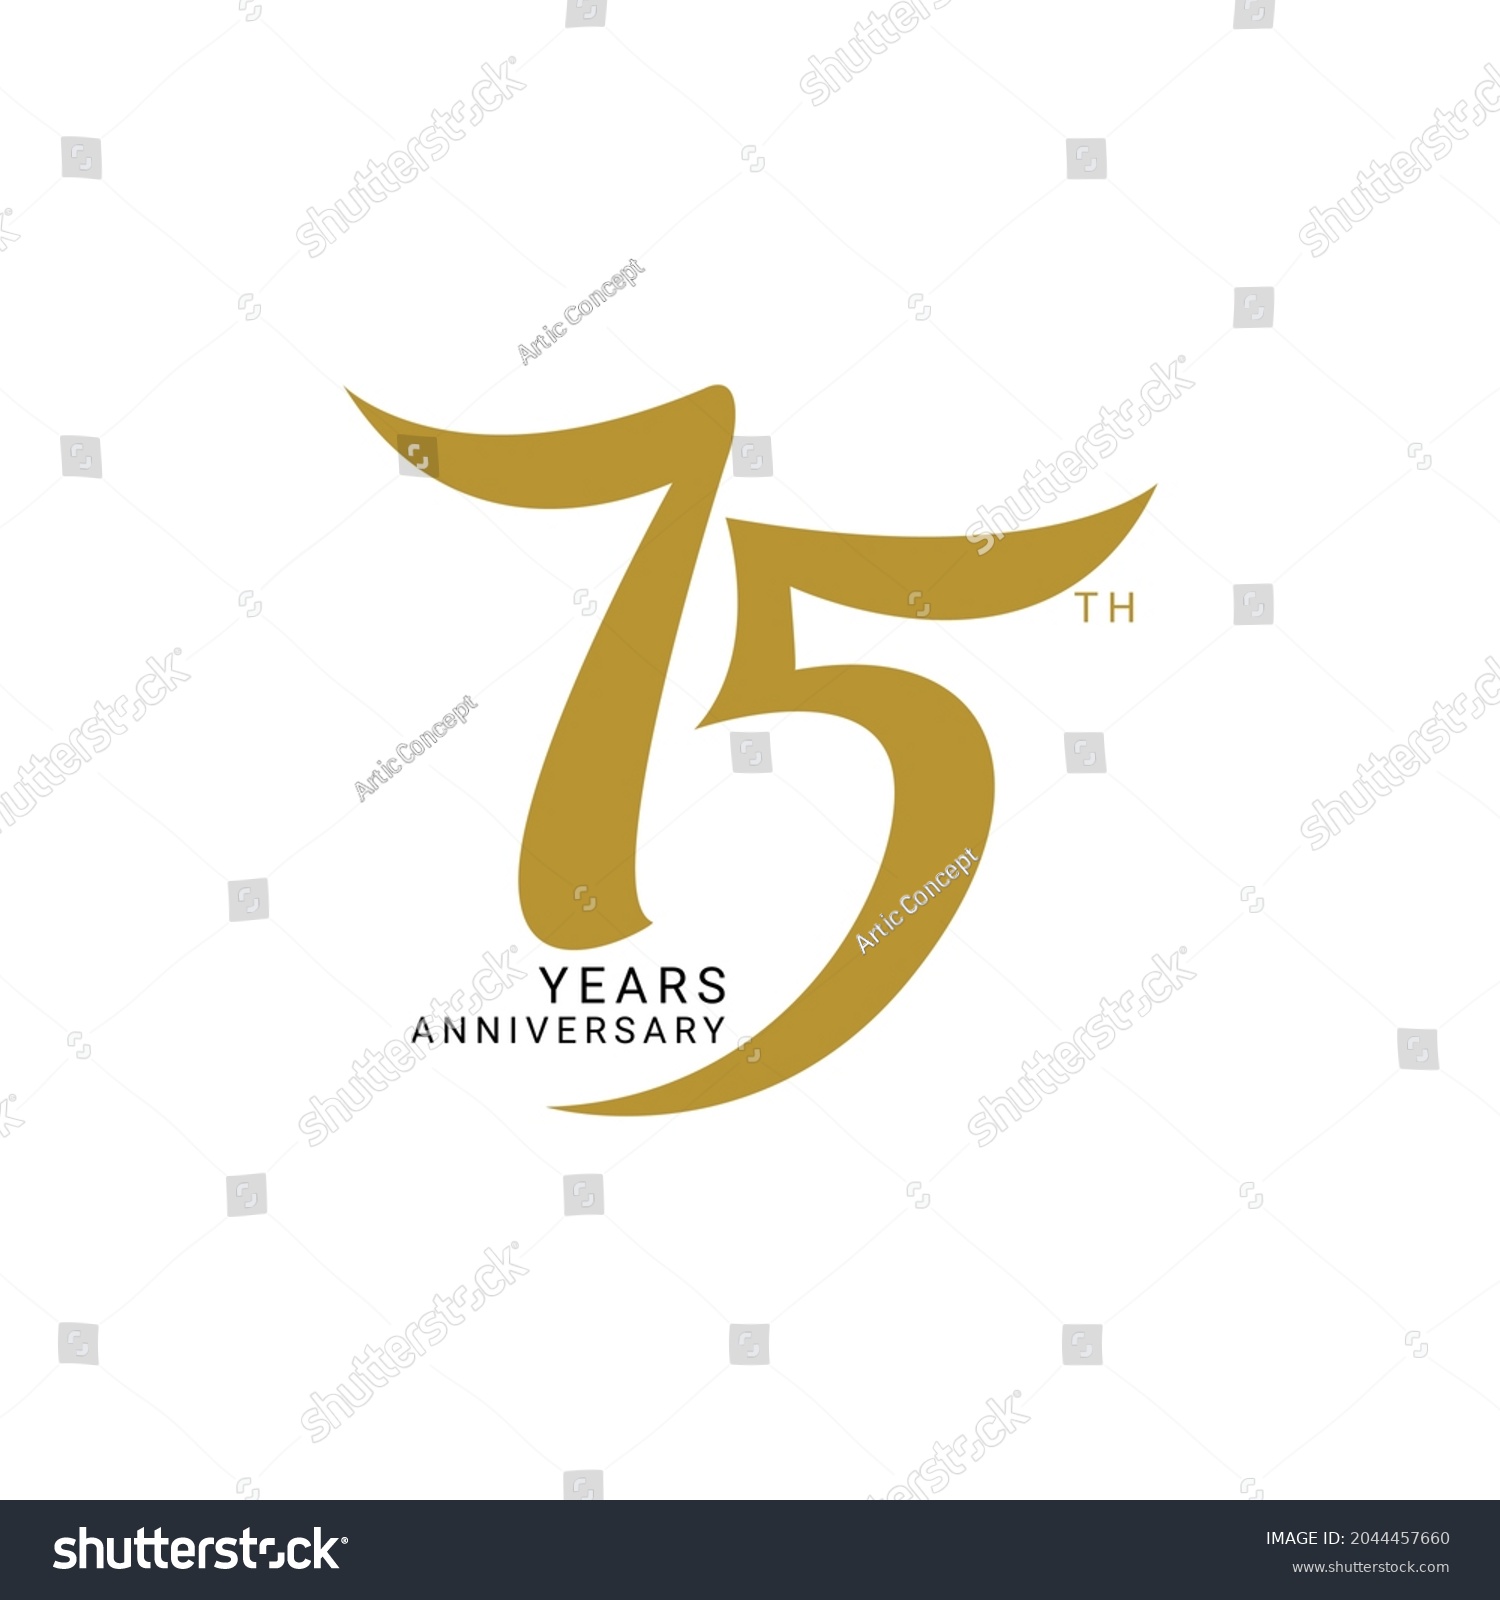 75 Year Anniversary Logo, Vector Template Design - Royalty Free Stock ...